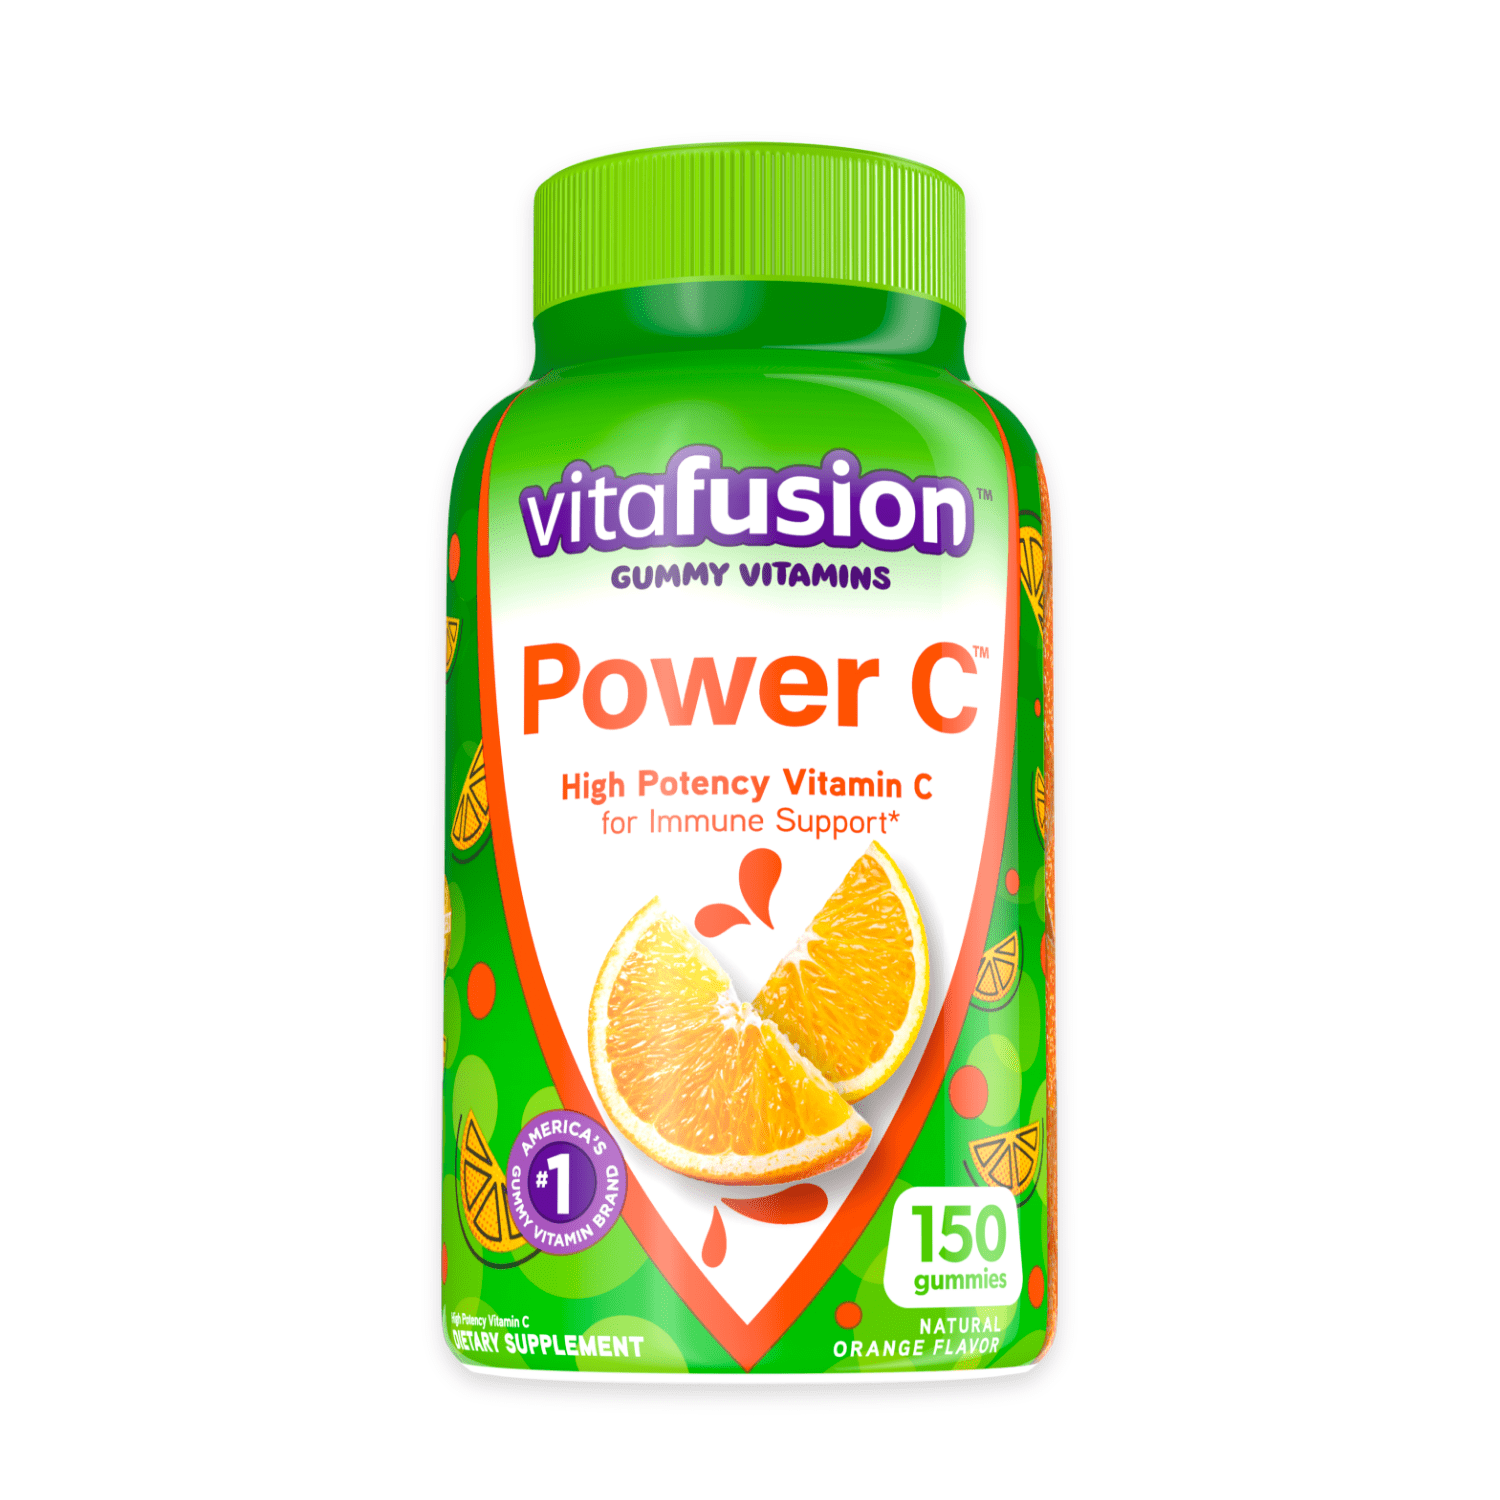 Vitafusion Power C Gummies for Immune Support